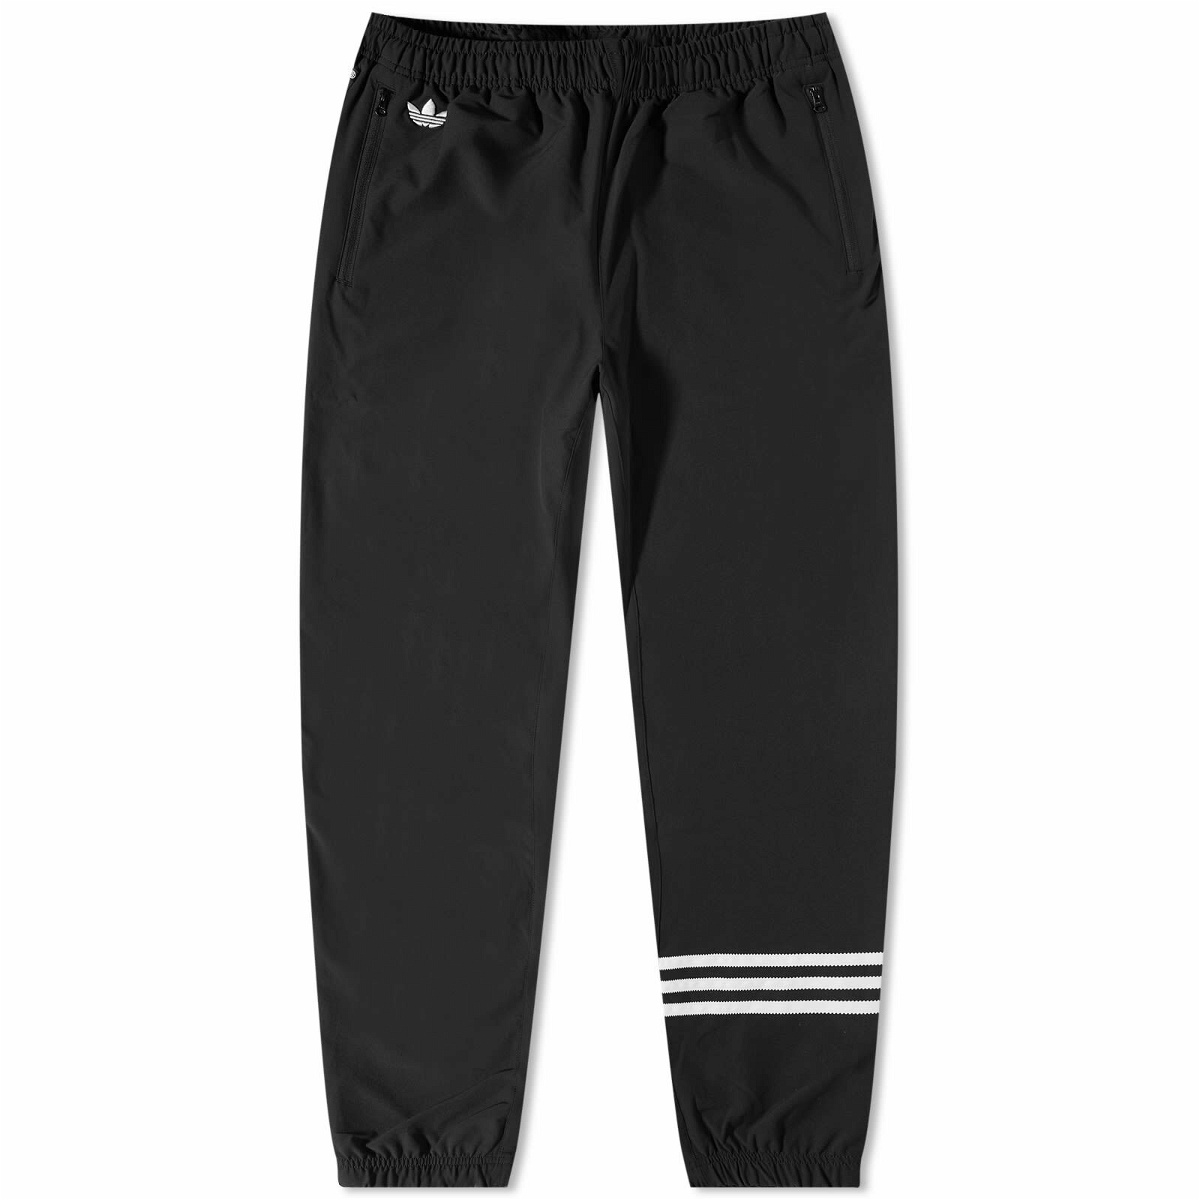 Sierra detalles Carne de cordero Adidas ID Champ Pant Black adidas